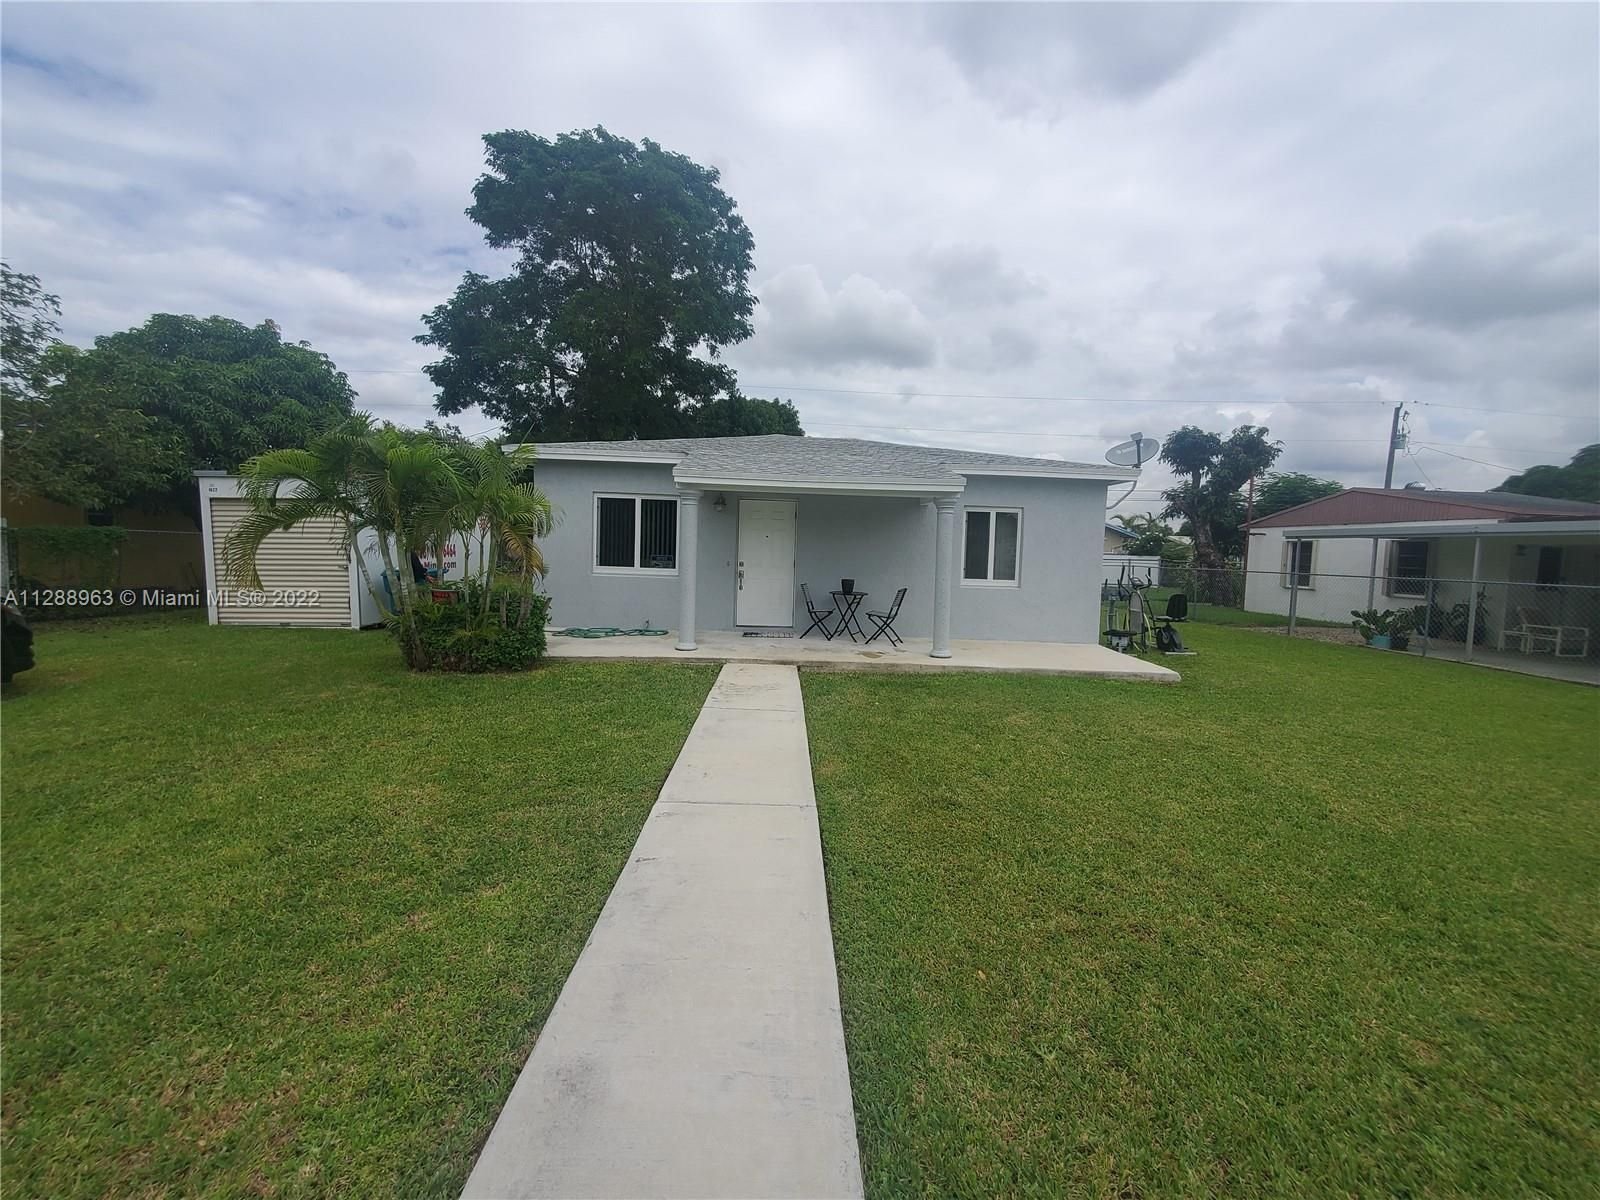 Real estate property located at 10135 170th Ter, Miami-Dade County, Miami, FL